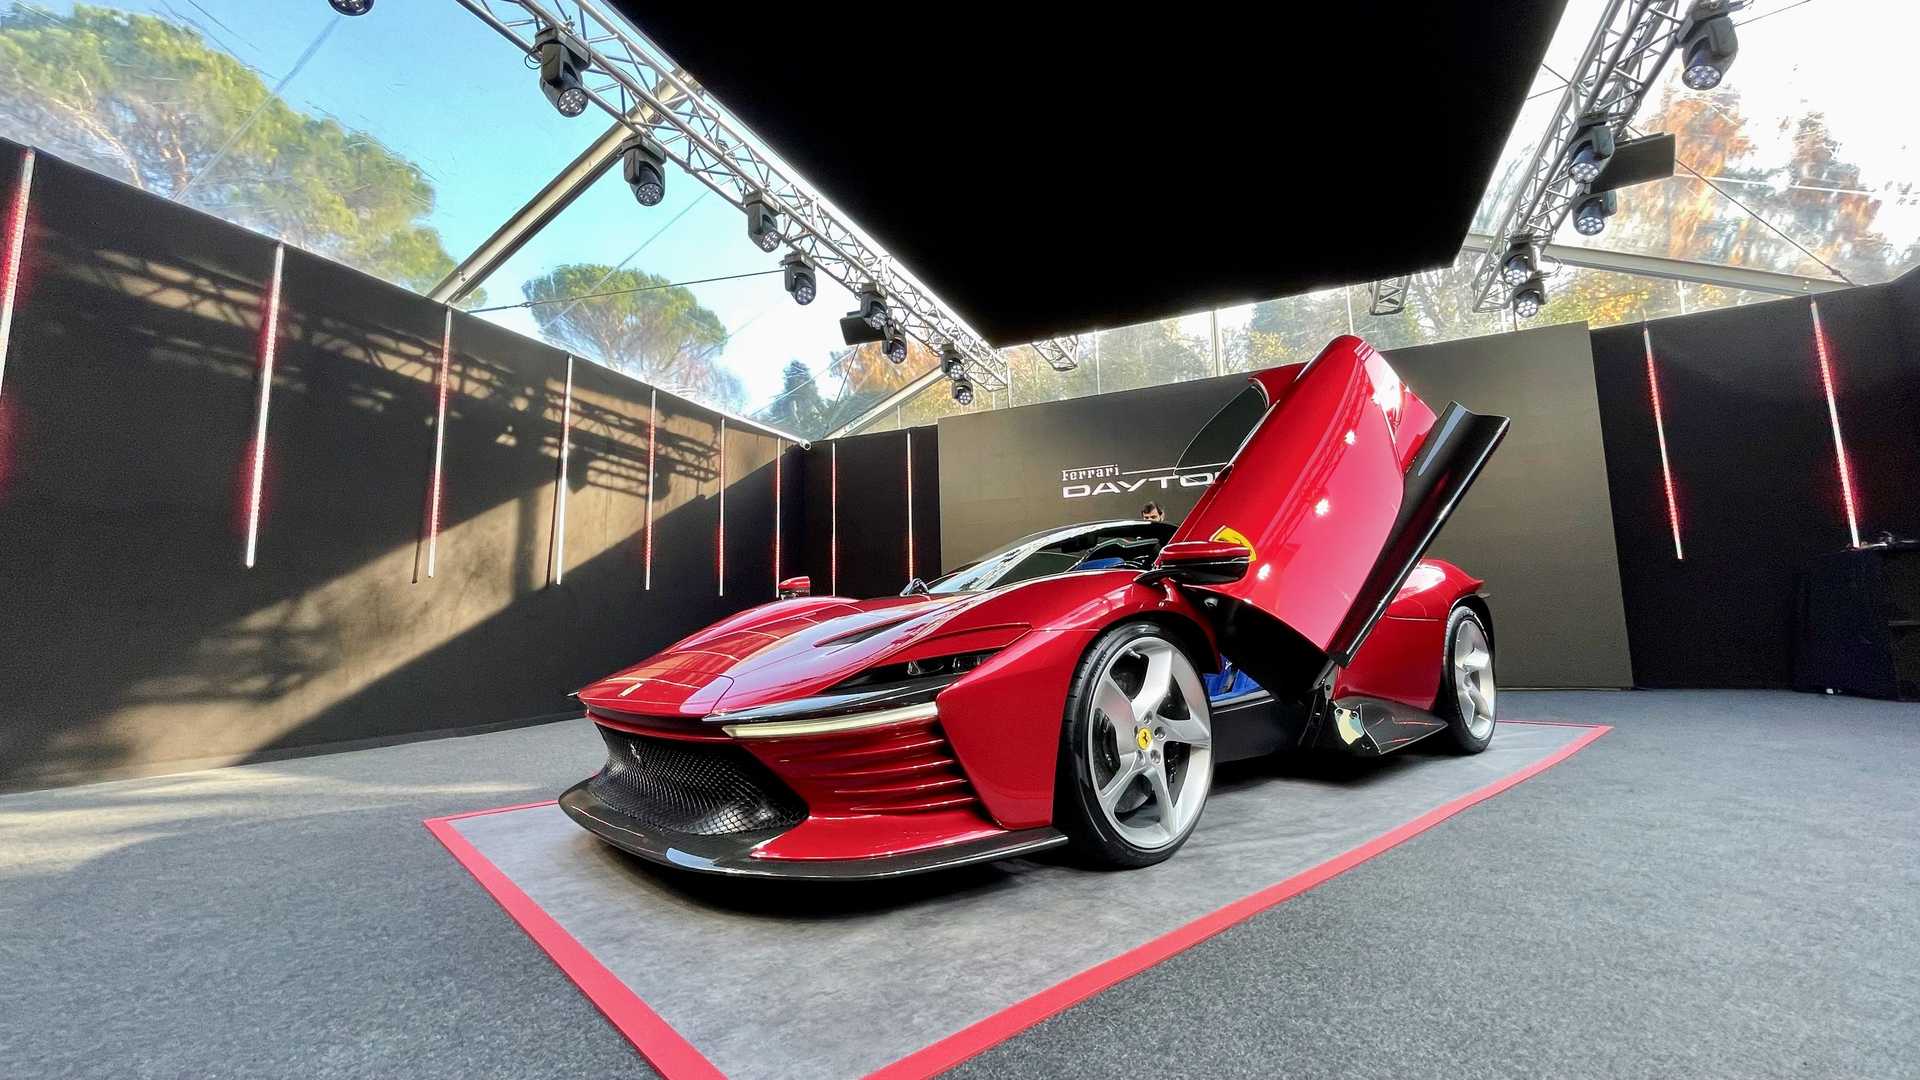 Ferrari 2 млн евролик эксклюзив Daytona SP3 суперкарини тақдим этди (фото)